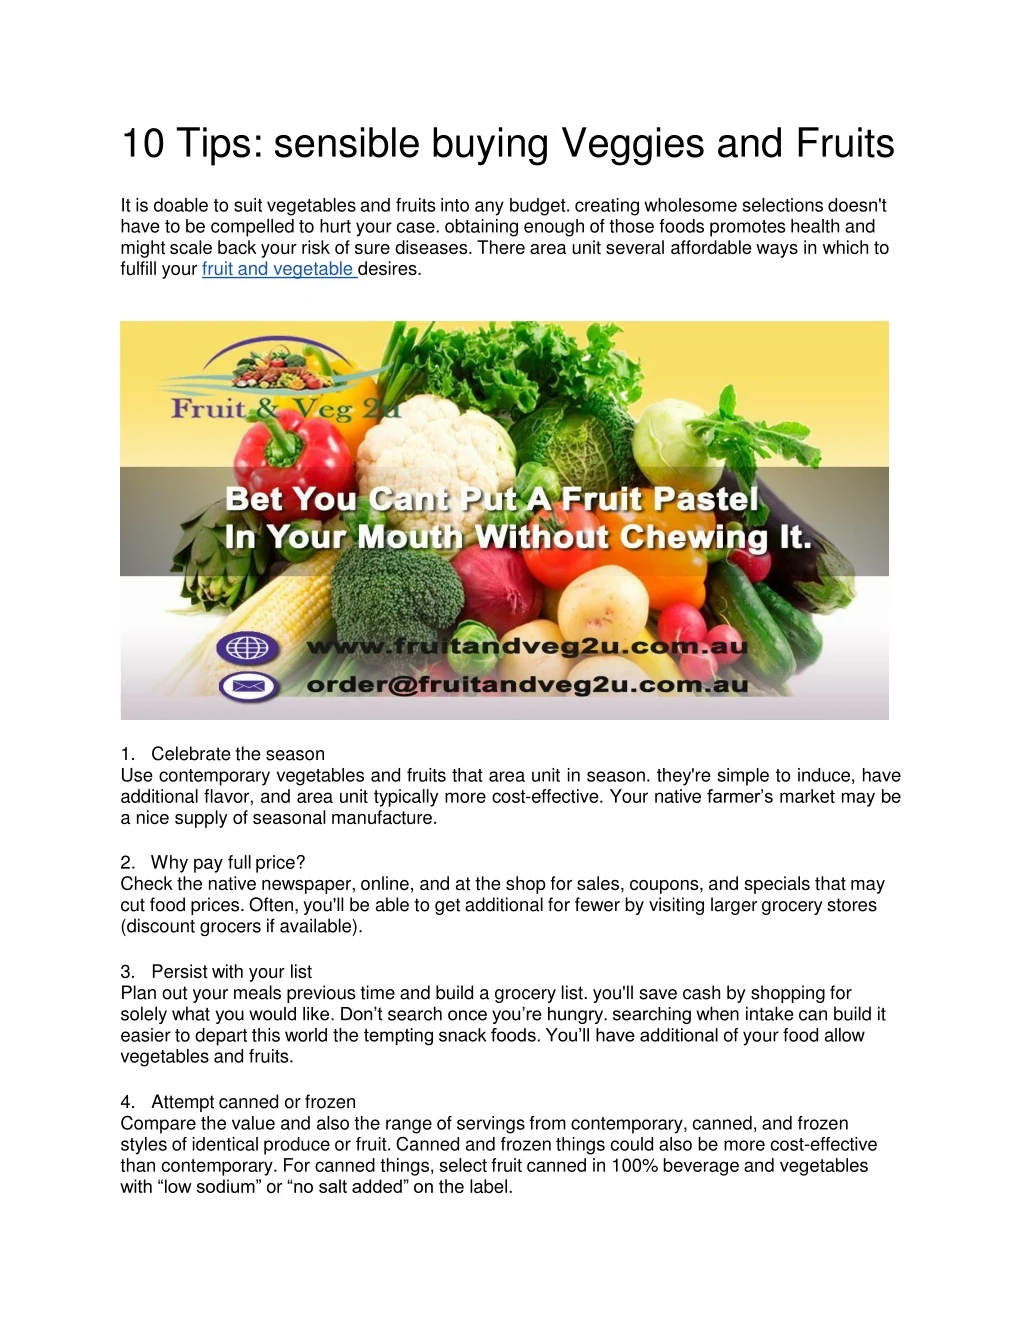 10 tips sensible buying veggies and fruits